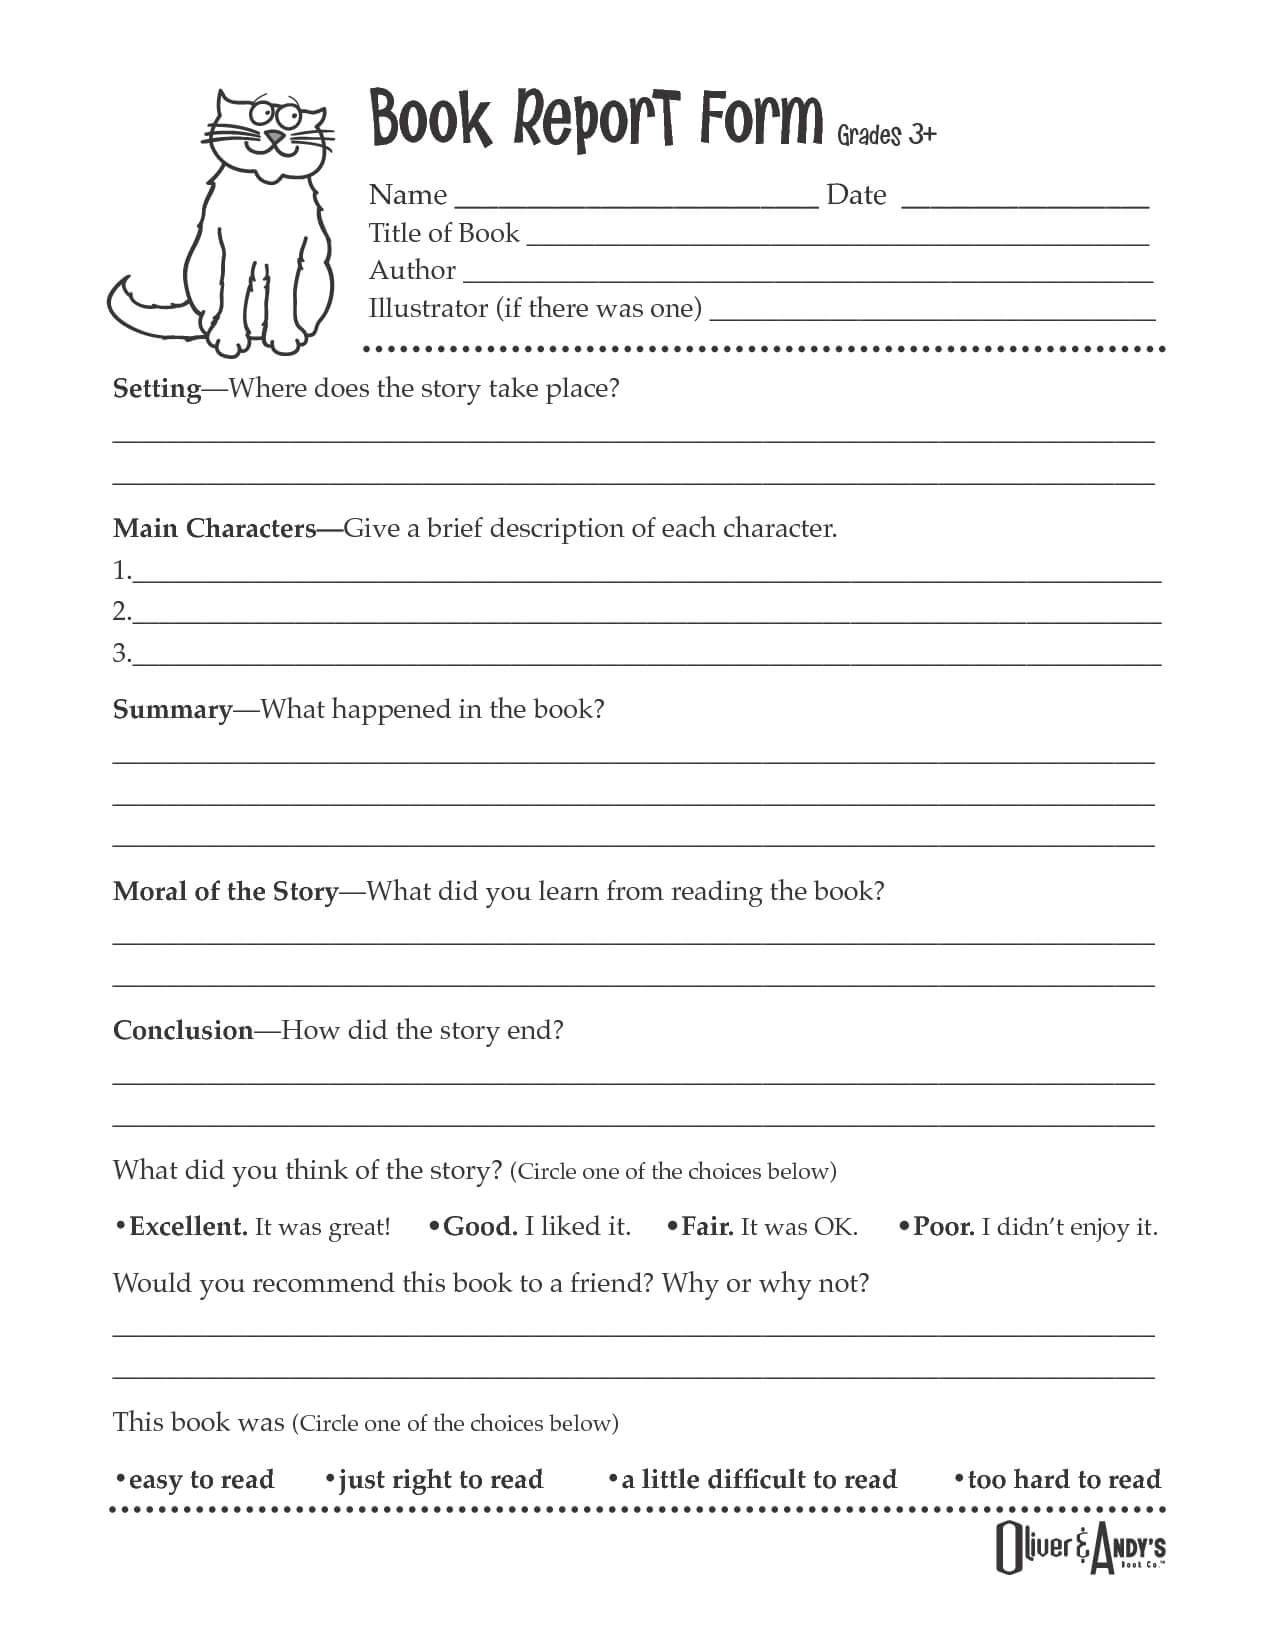 Second Grade Book Report Template | Book Report Form Grades With 2Nd Grade Book Report Template